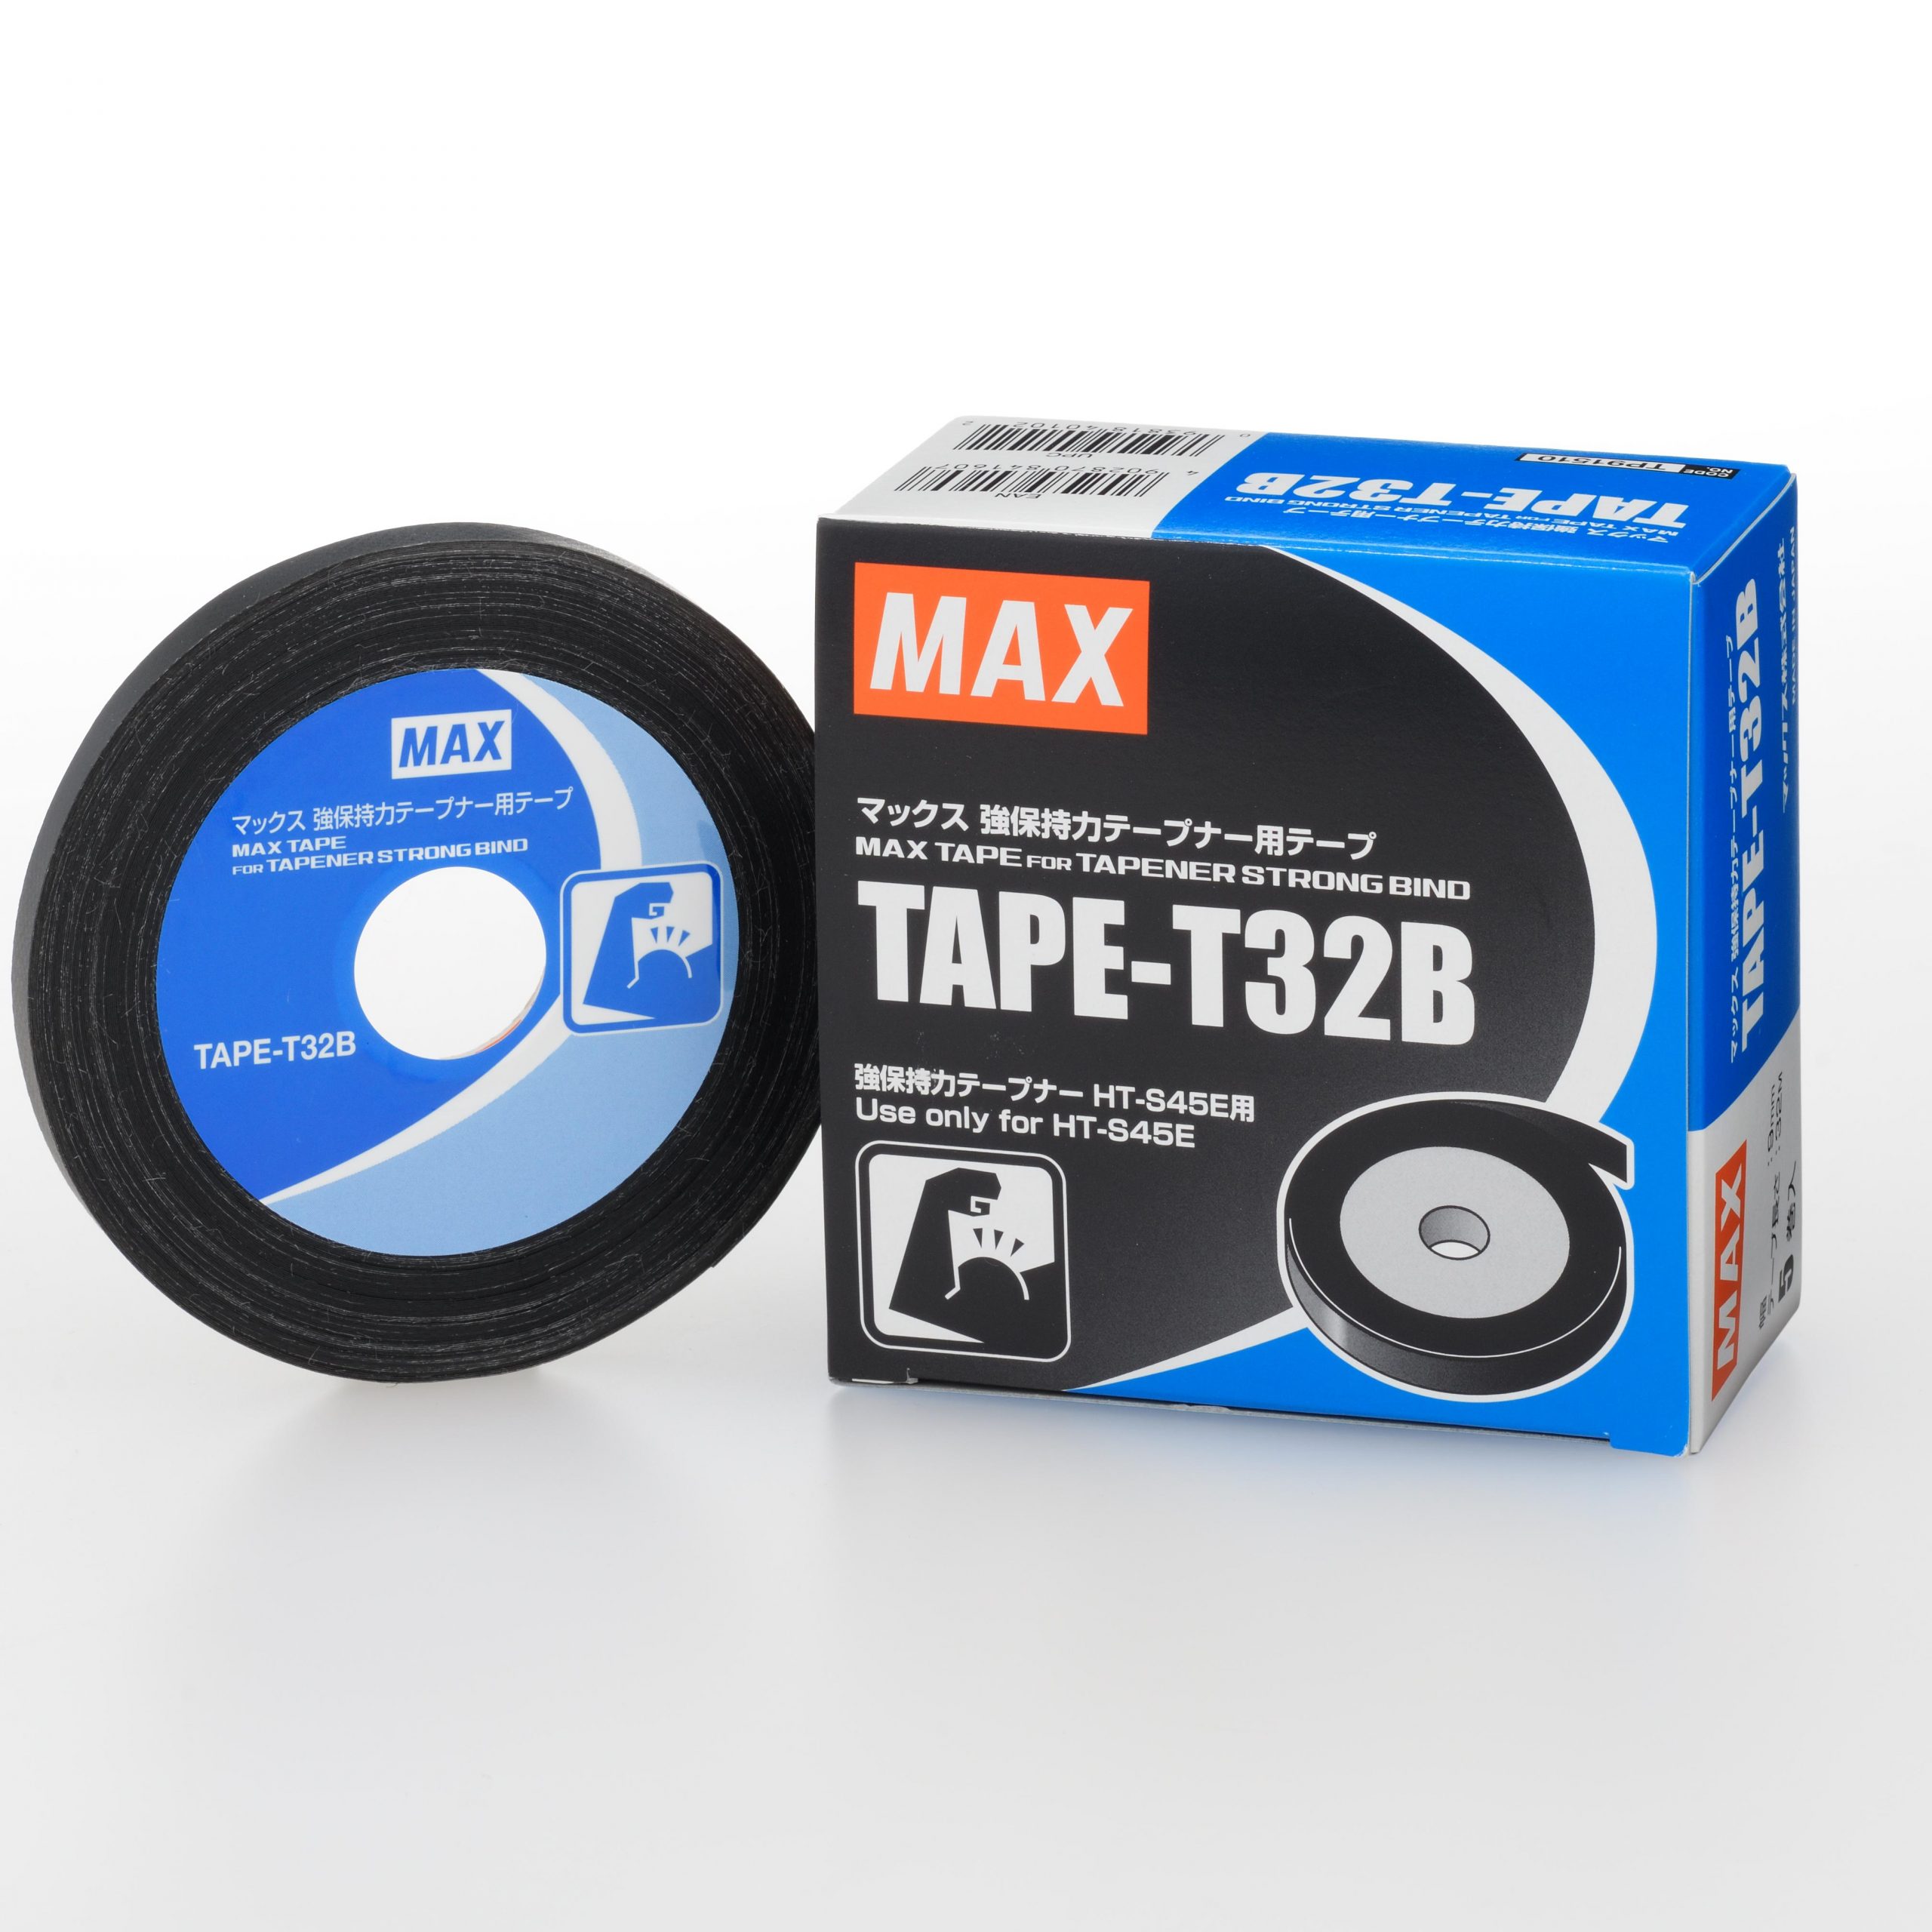 TAPE-T32B - MAX Australia - The world's professional tool manufacturer